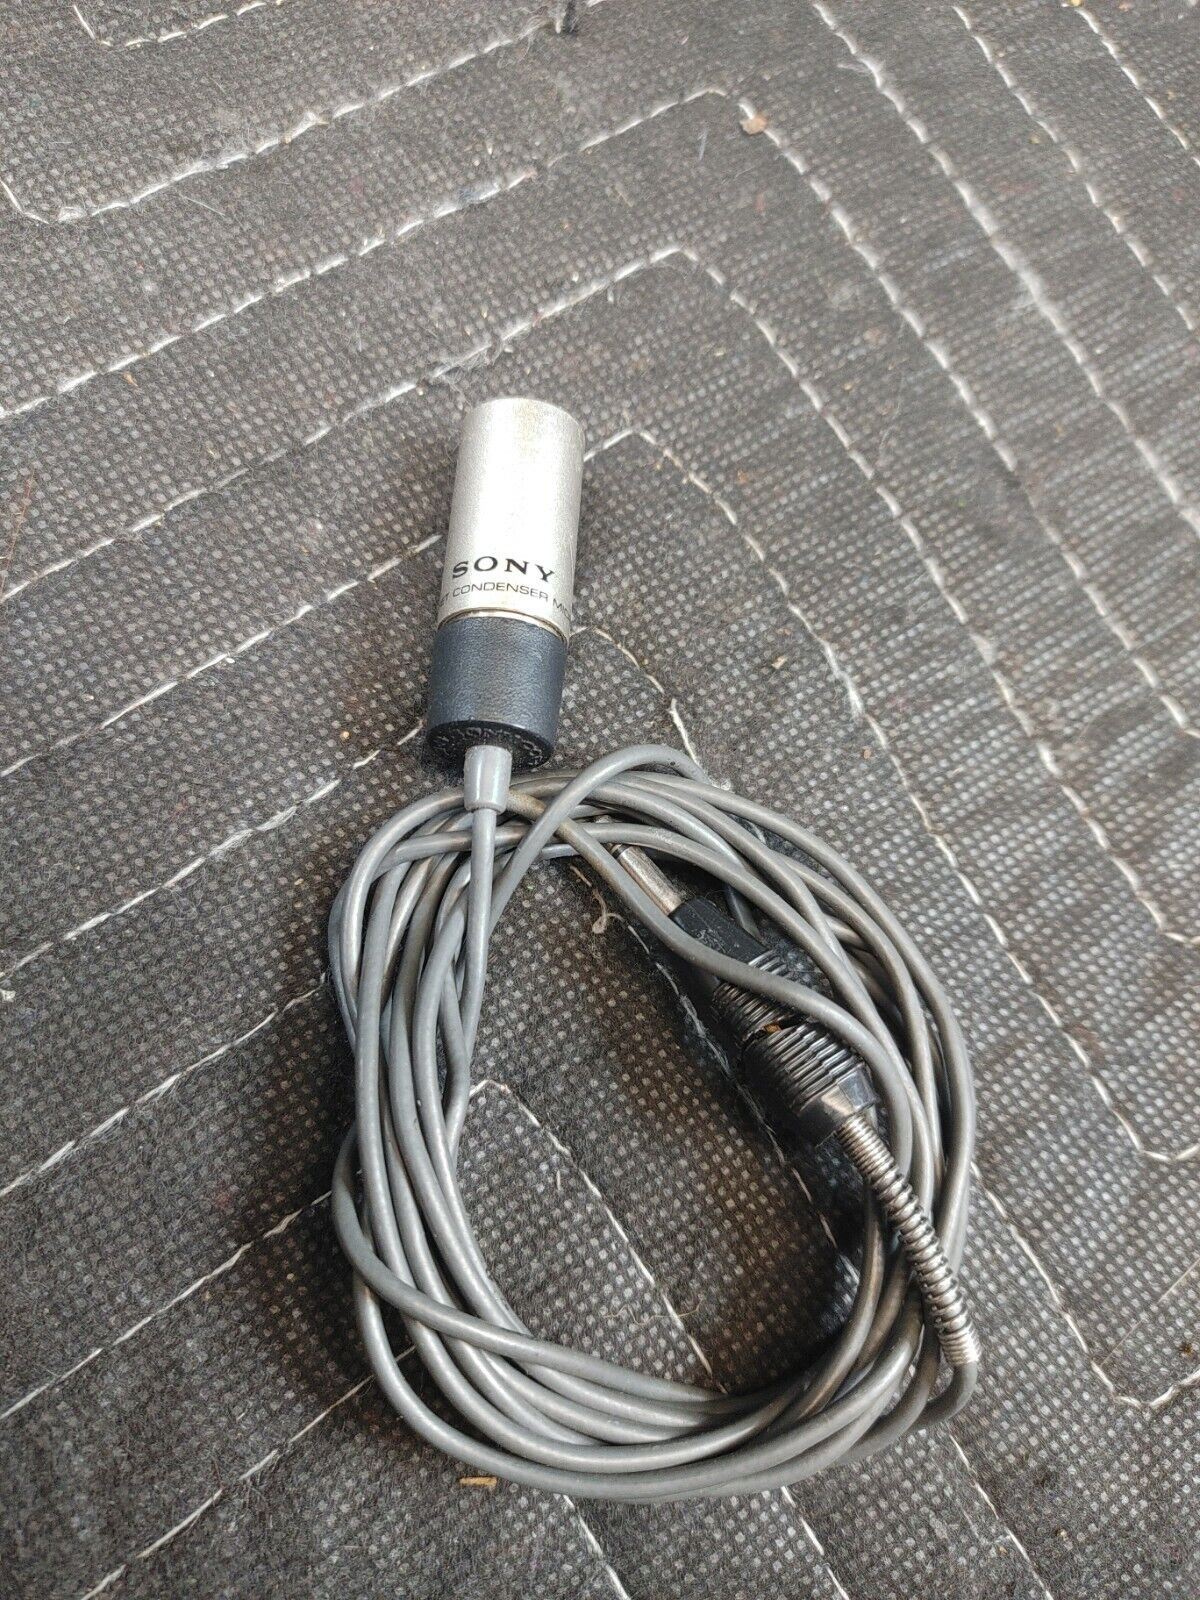 Sony ECM-16 Electret Condenser Microphone